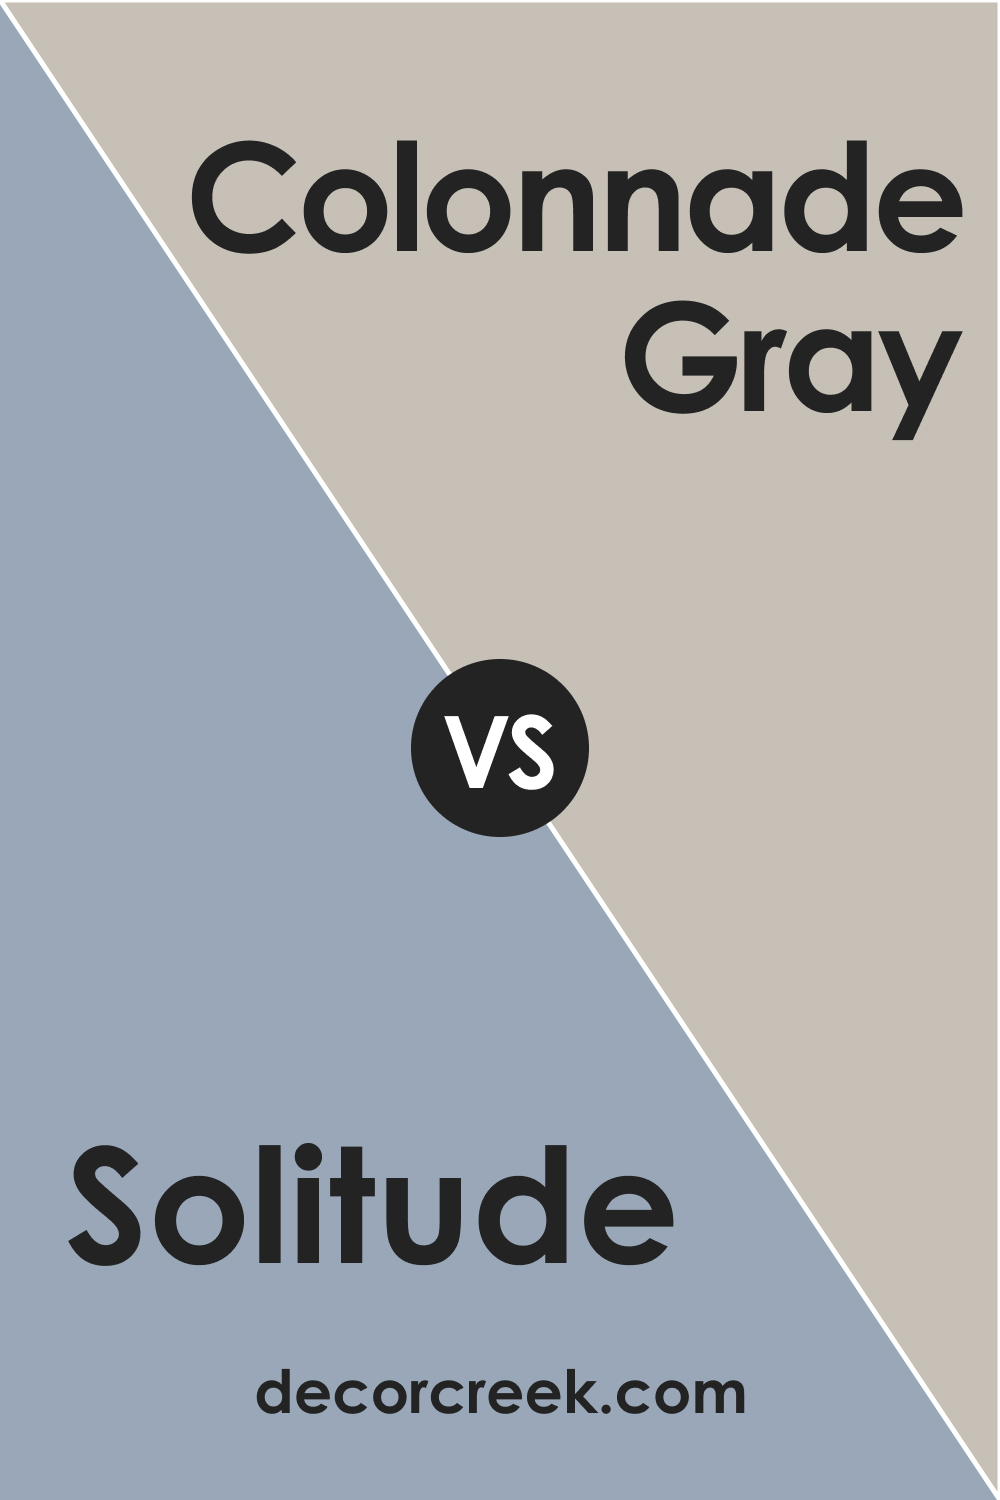 SW 6535 Solitude vs. SW 7641 Collonade Gray